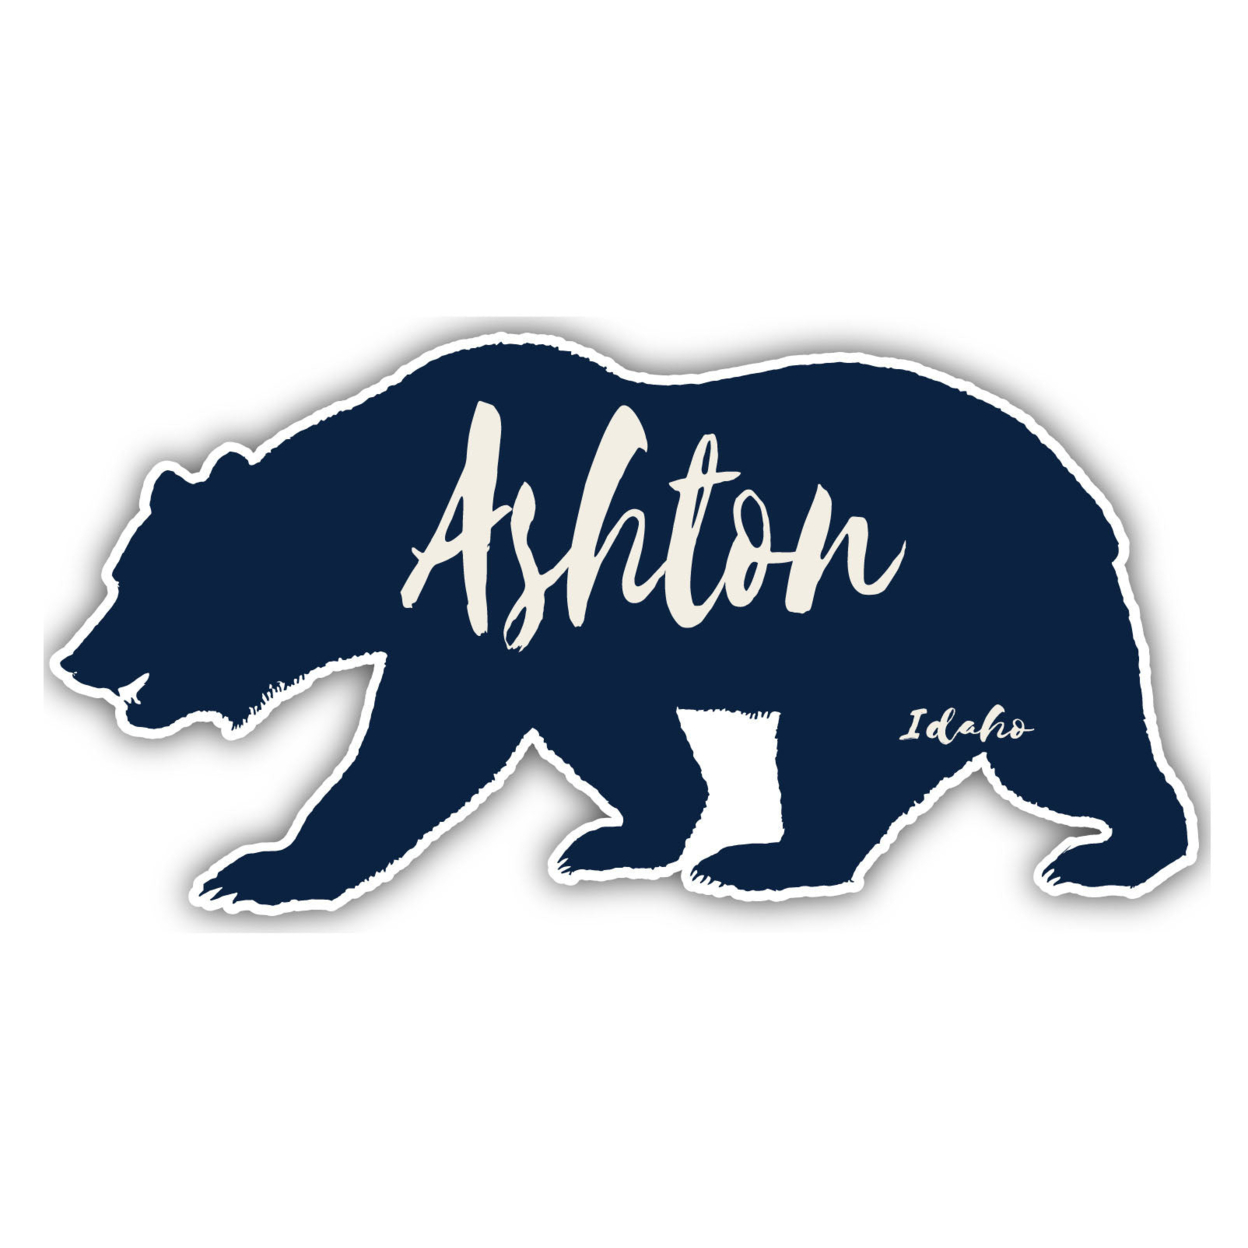 Ashton Idaho Souvenir Decorative Stickers (Choose Theme And Size) - Single Unit, 6-Inch, Tent